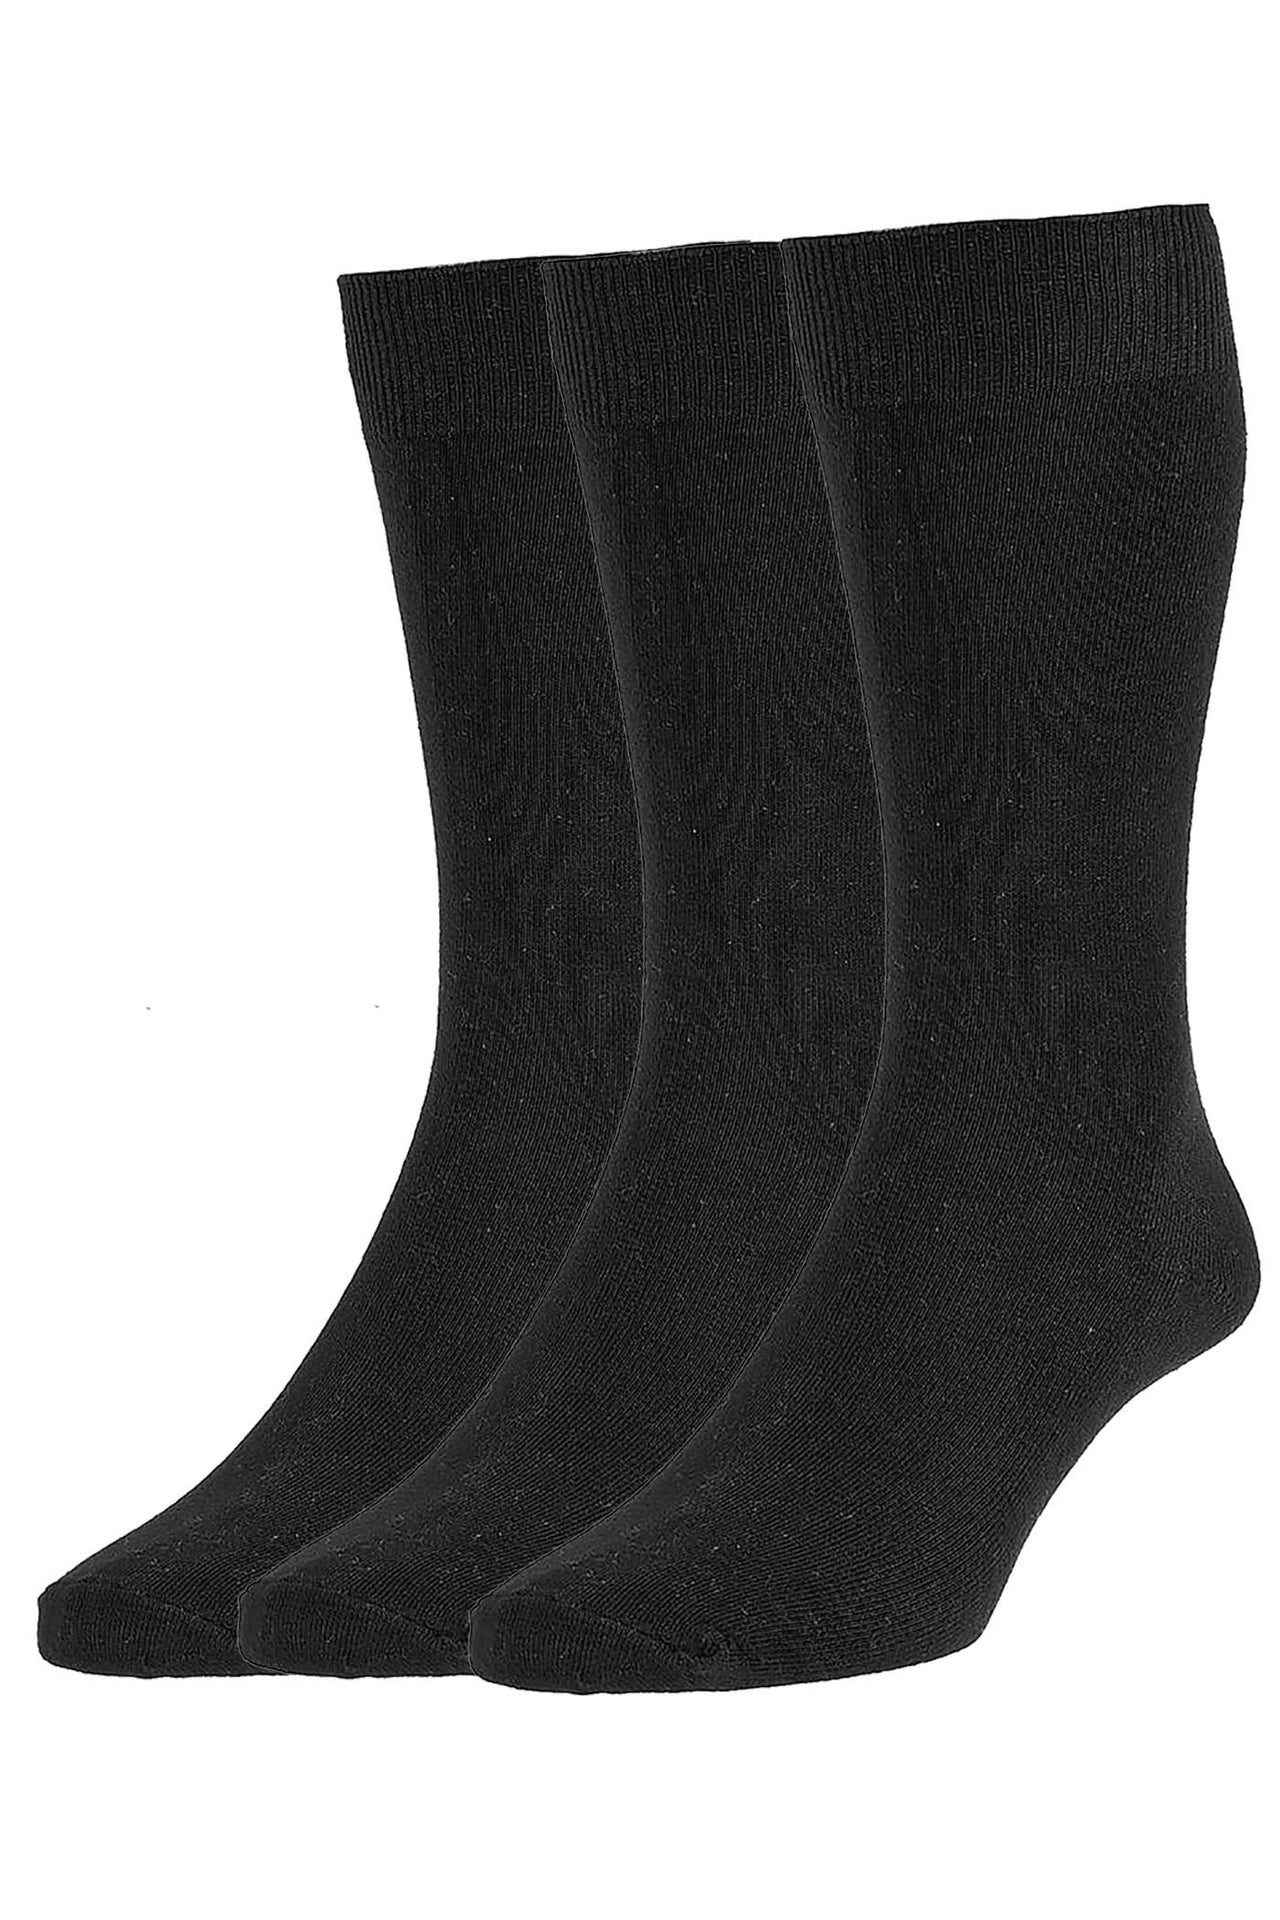 HJ Hall Plain Knit Black Cotton Socks 3 Pack